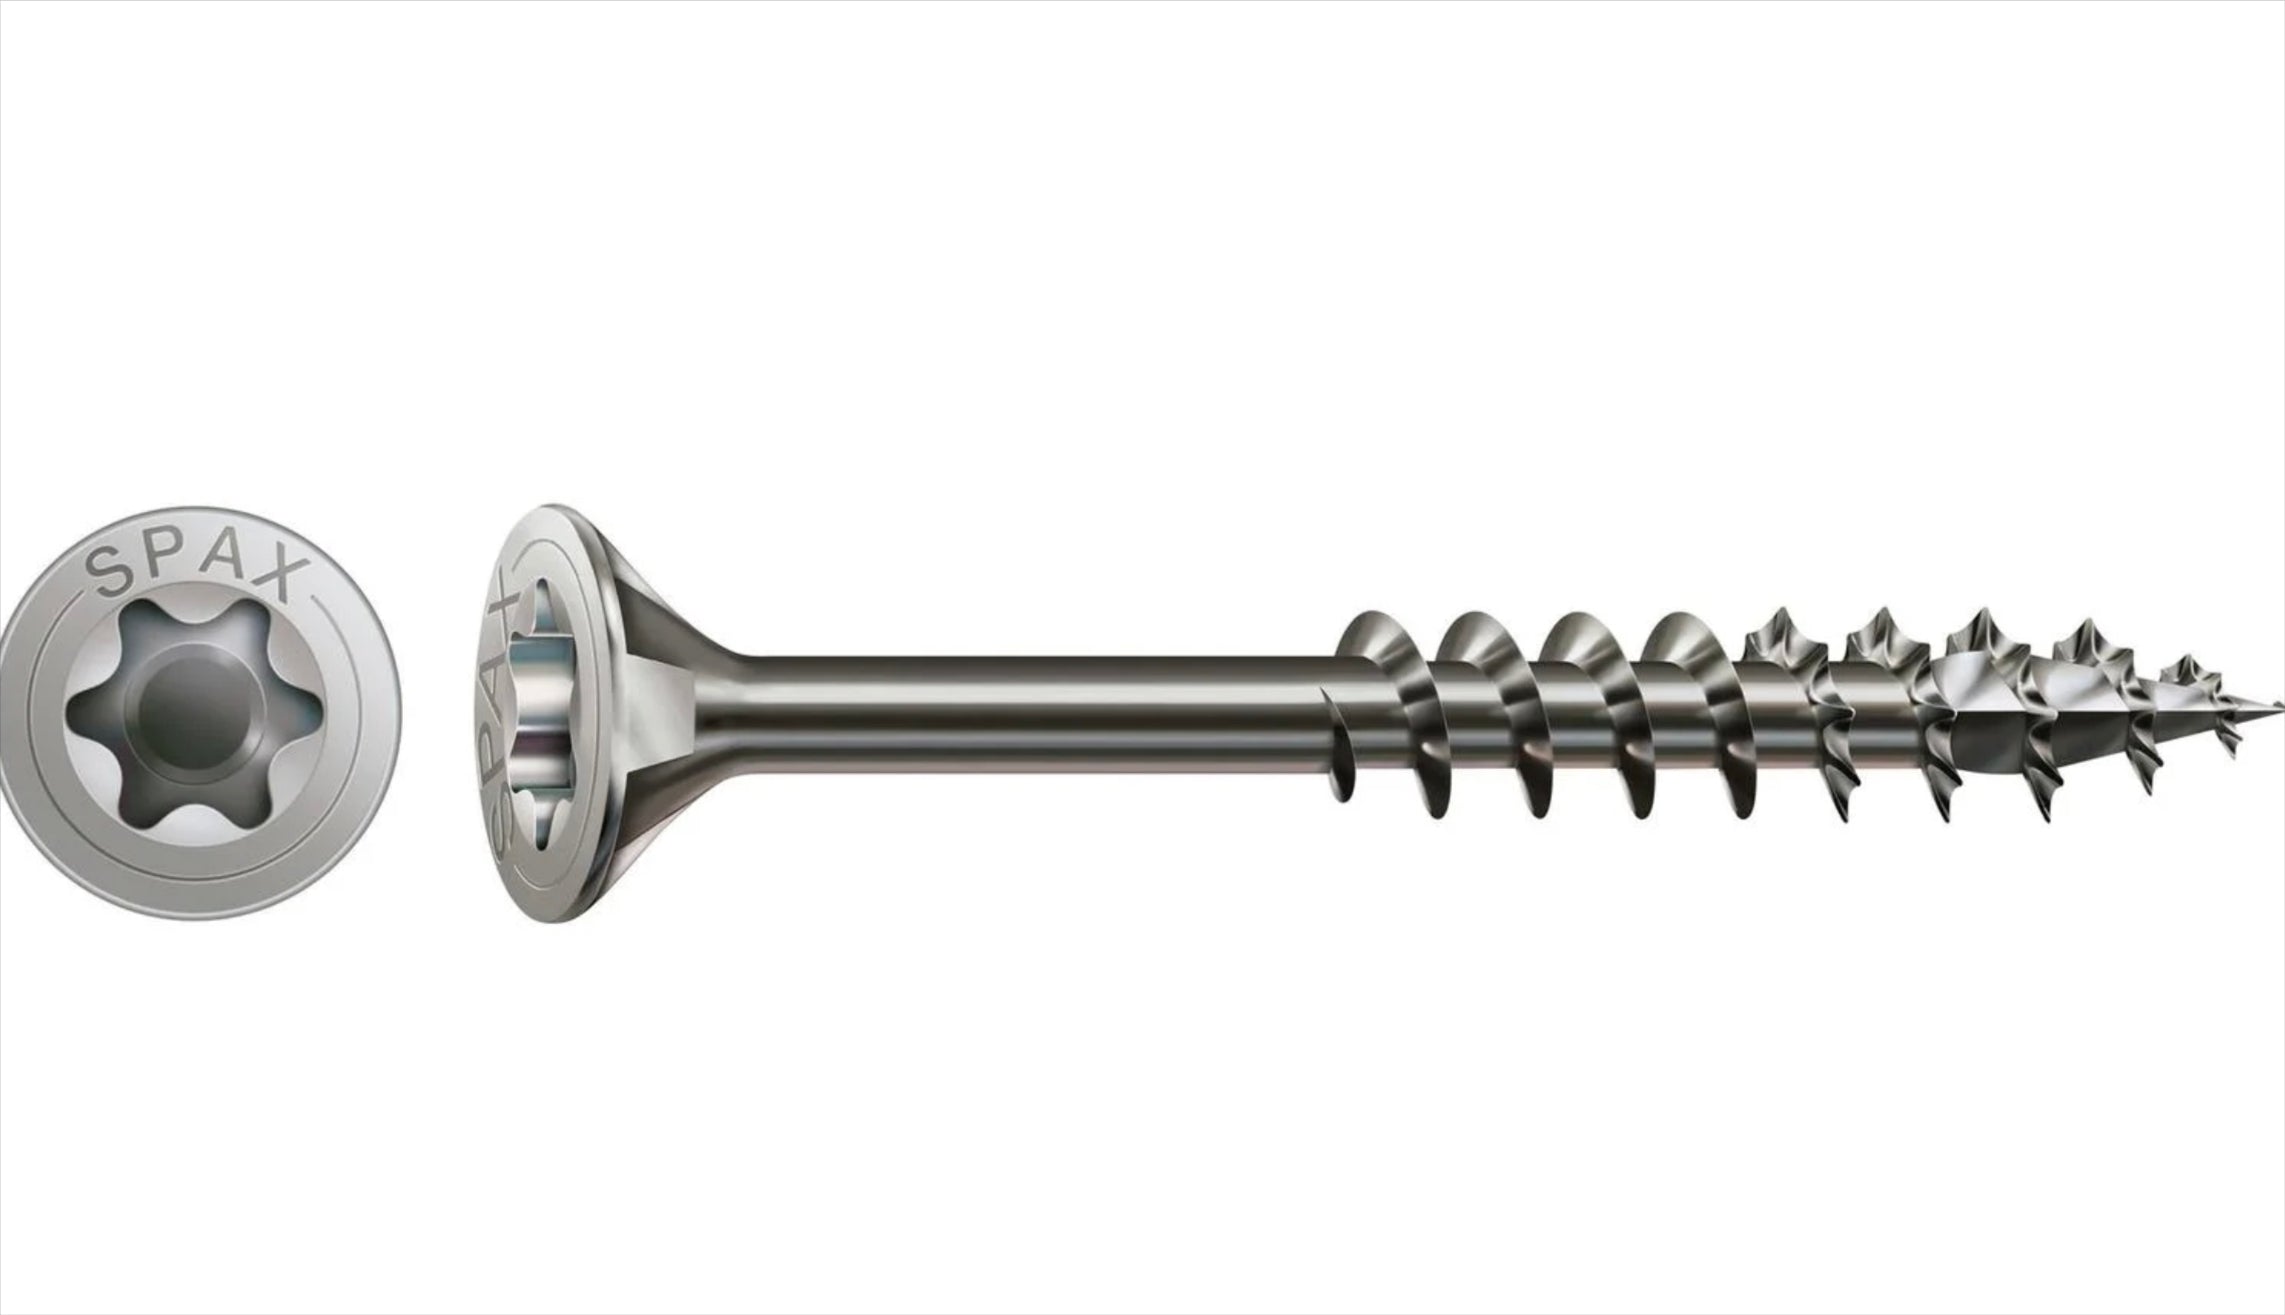 Spax Outdoor Universal Screws Diameter: 5Mm, Length: 60Mm Stainless Steel